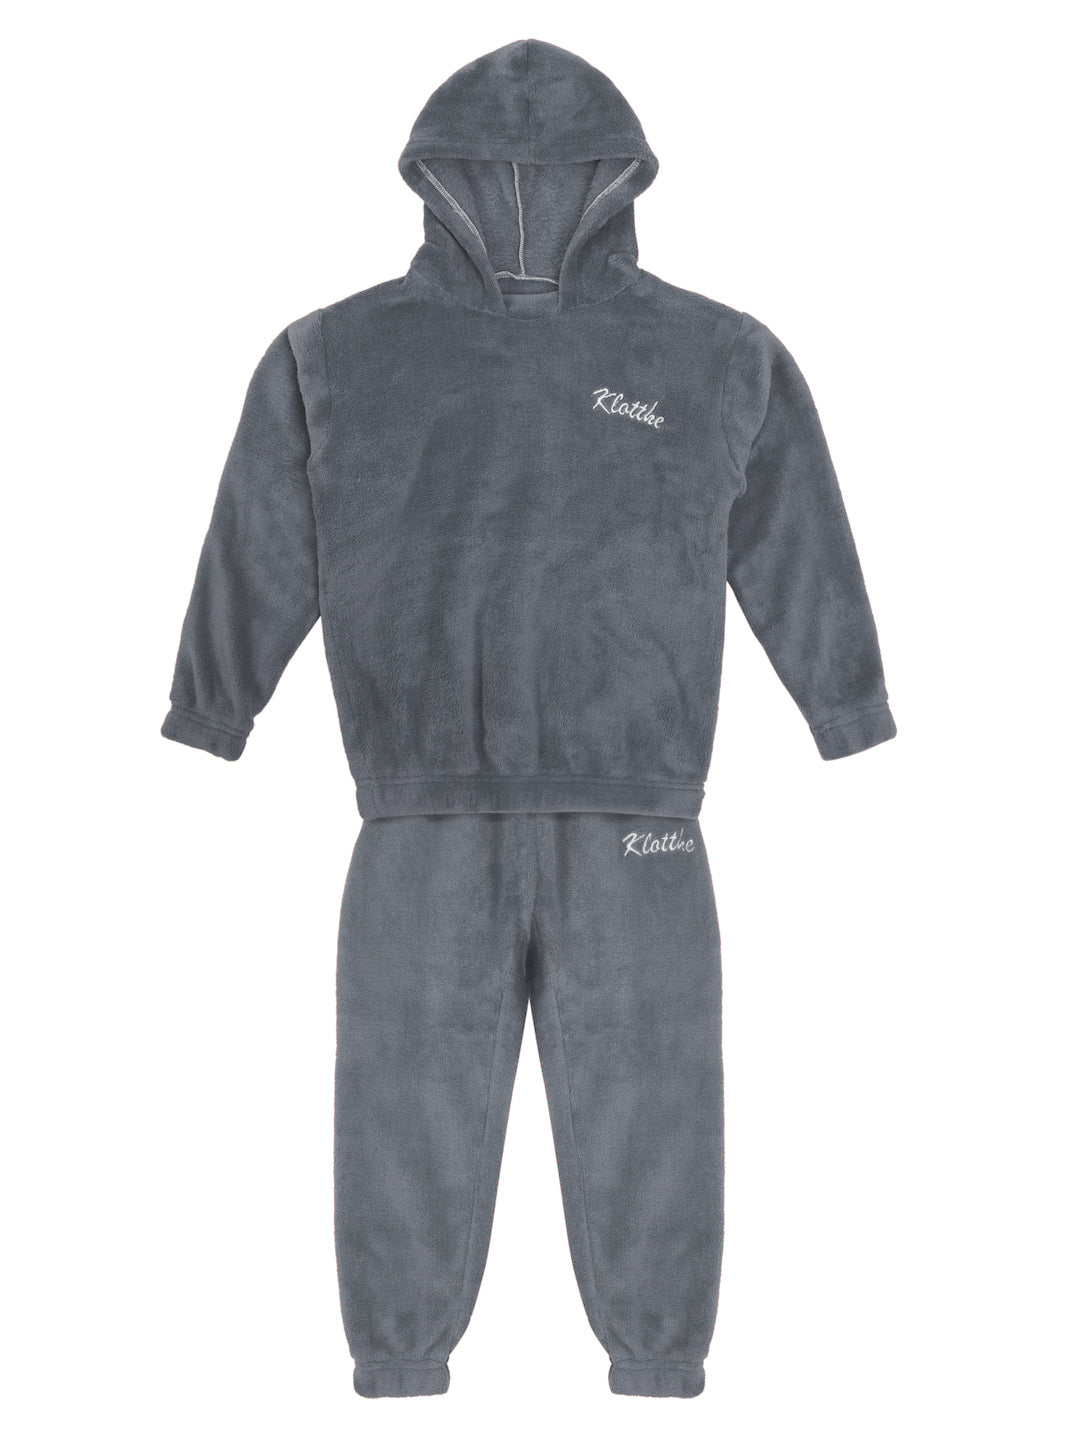 Klotthe Unisex Kids Grey Solid Wool Blend Night Suit